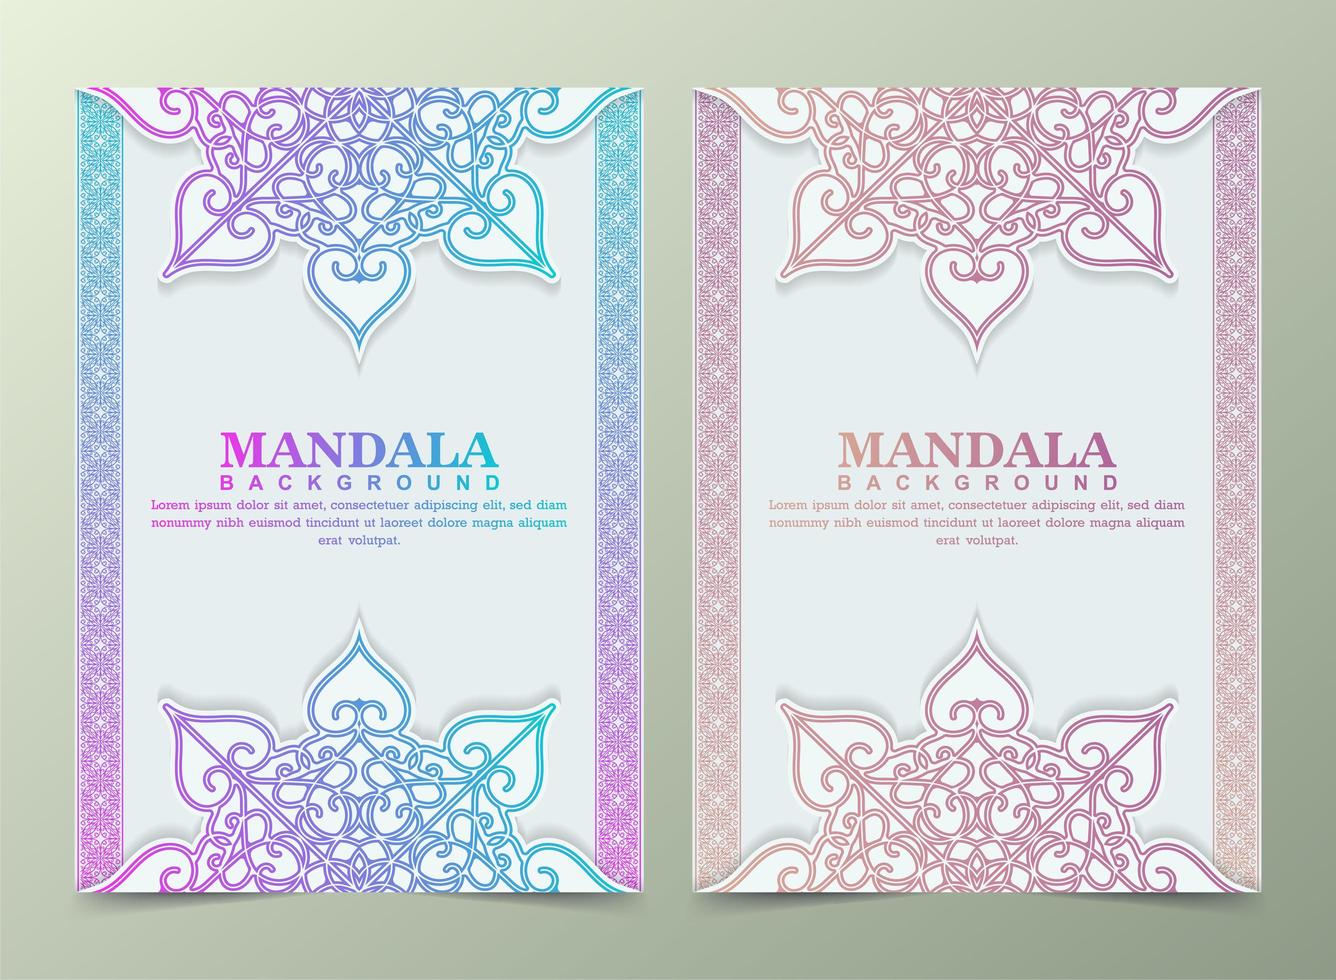 Vintage greeting card with colorful mandala motif vector